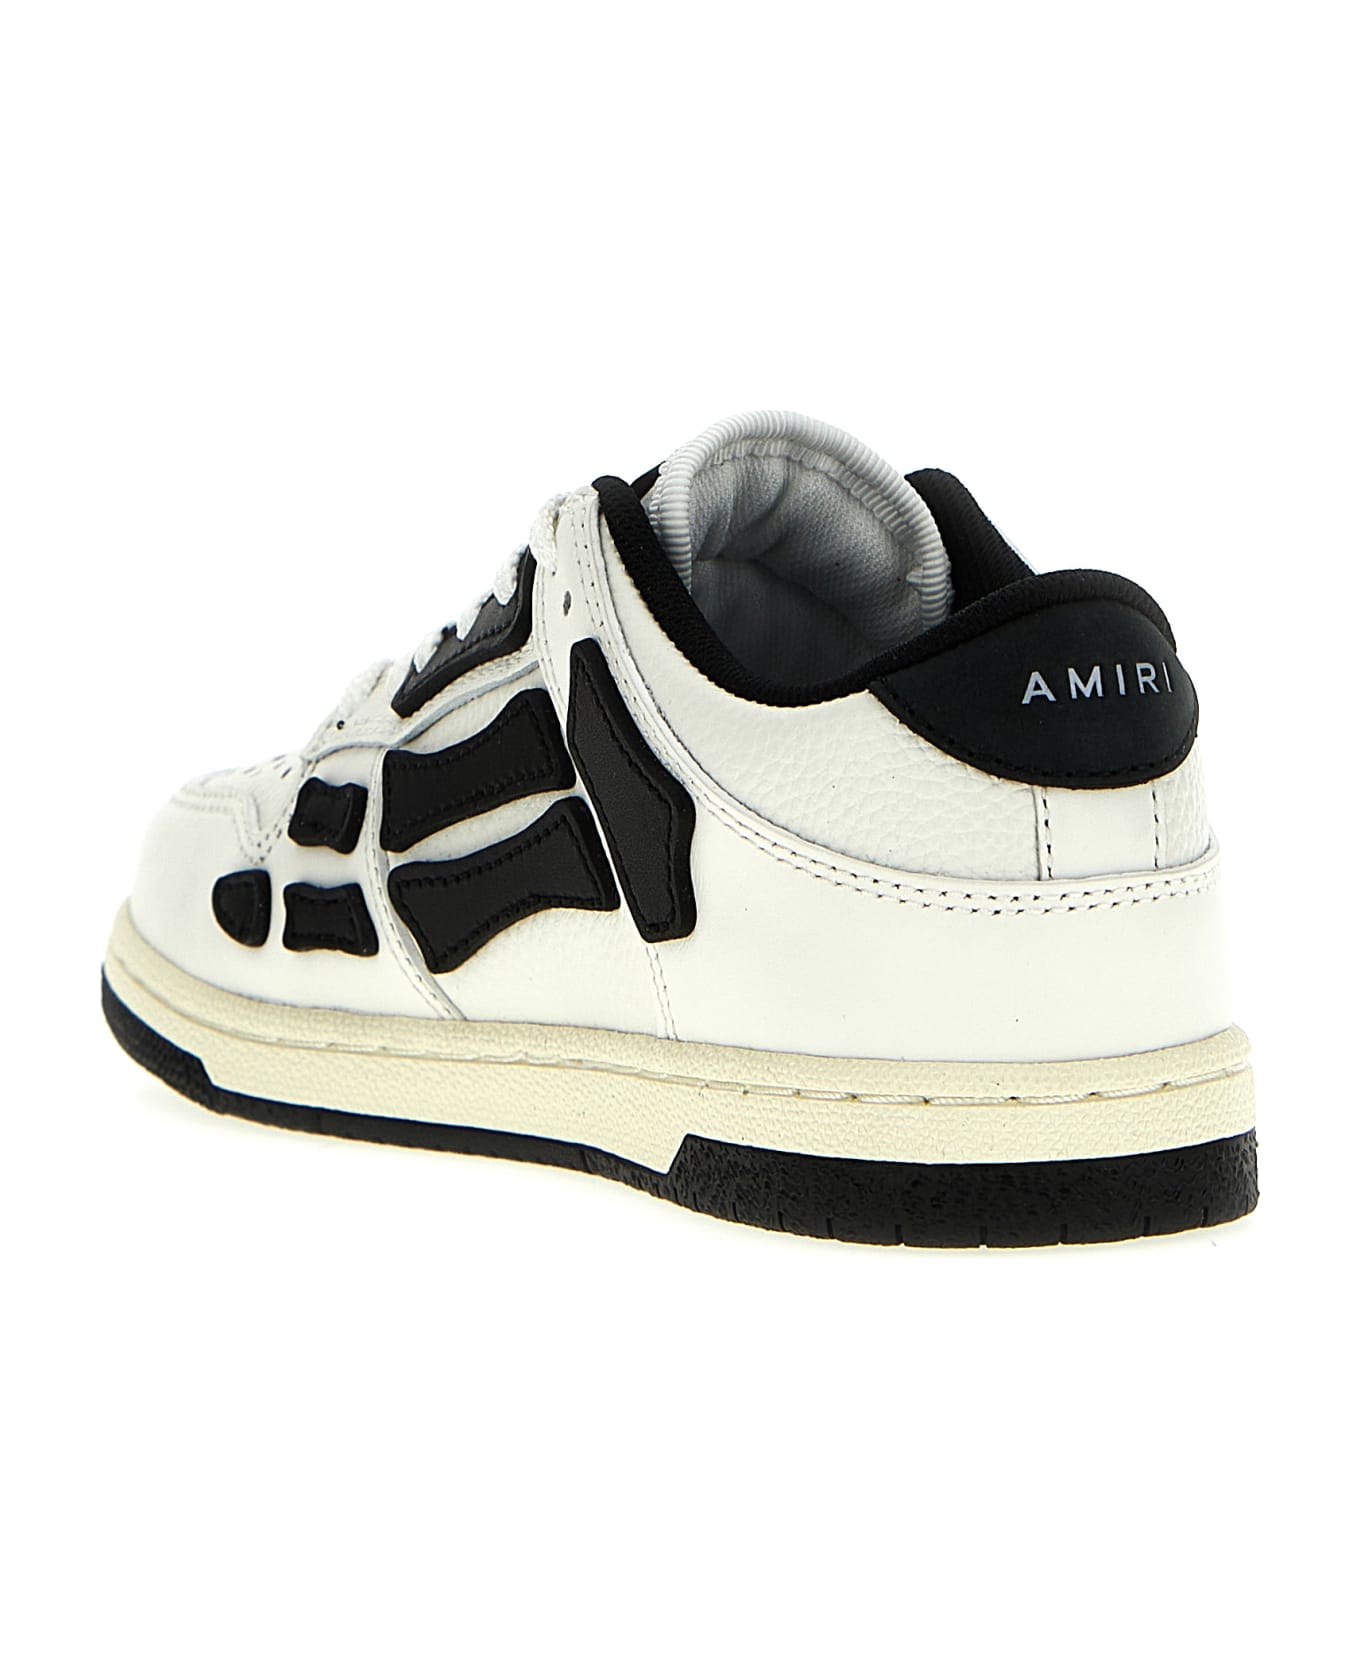 AMIRI 'asymmetric Low' Sneakers - White Black